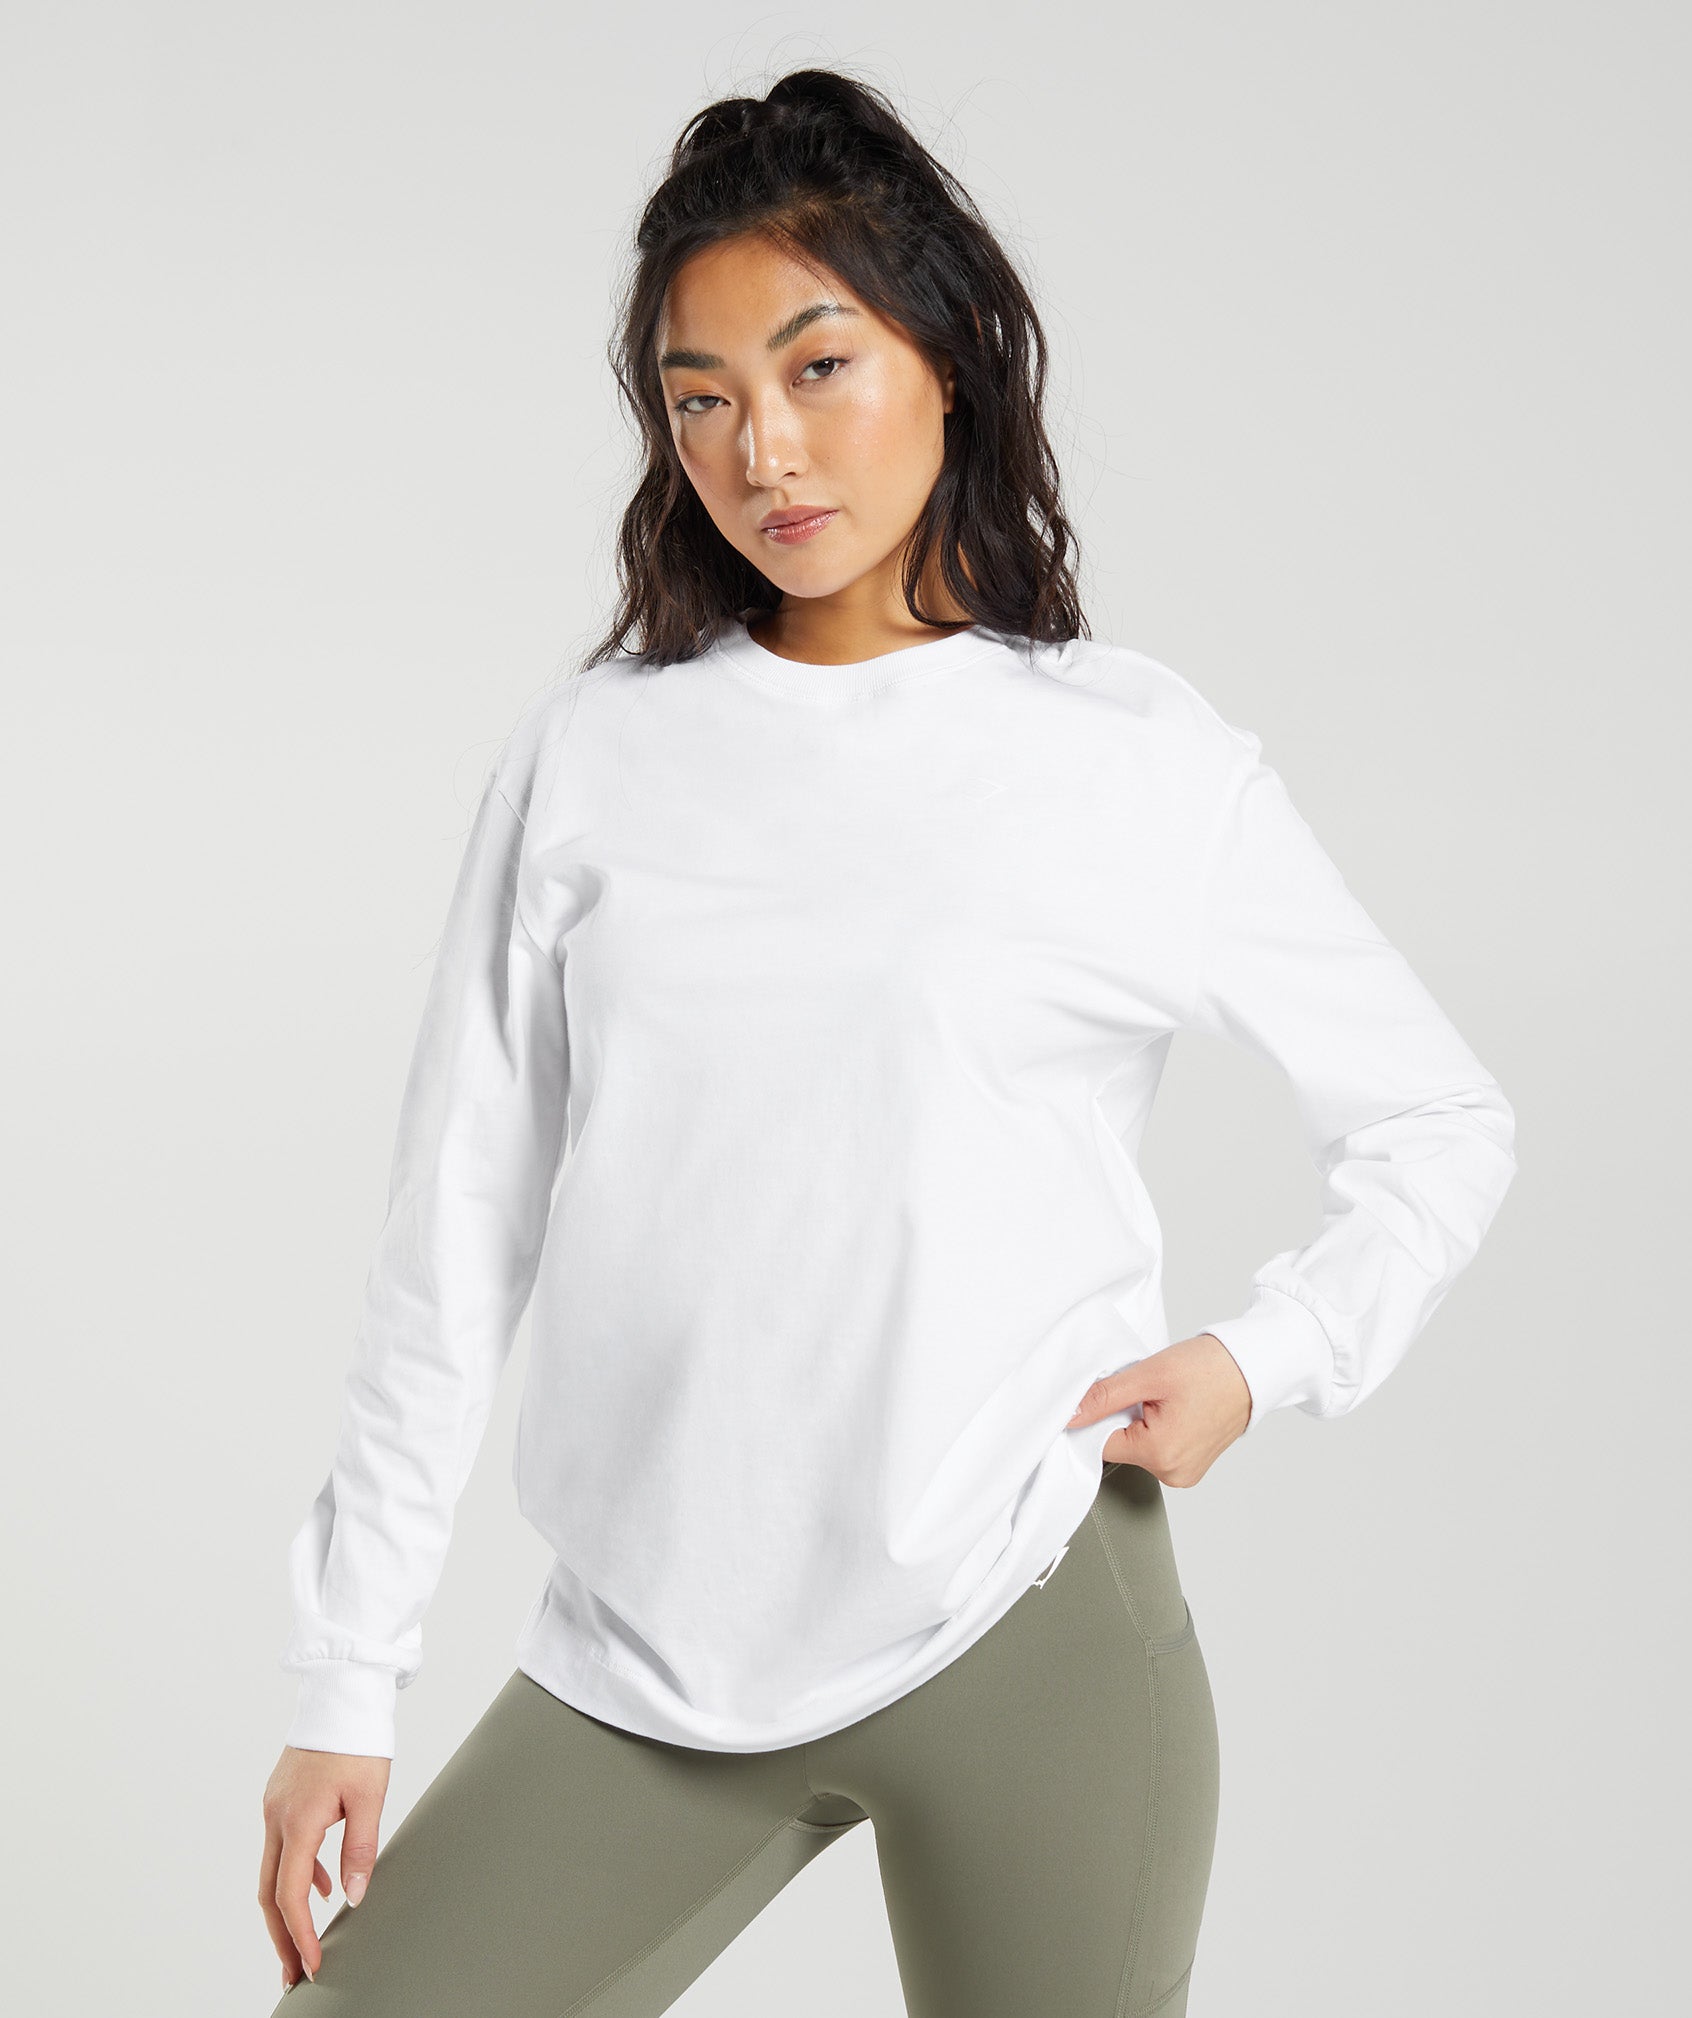 Gymshark Cotton Oversized Long Sleeve Top - White